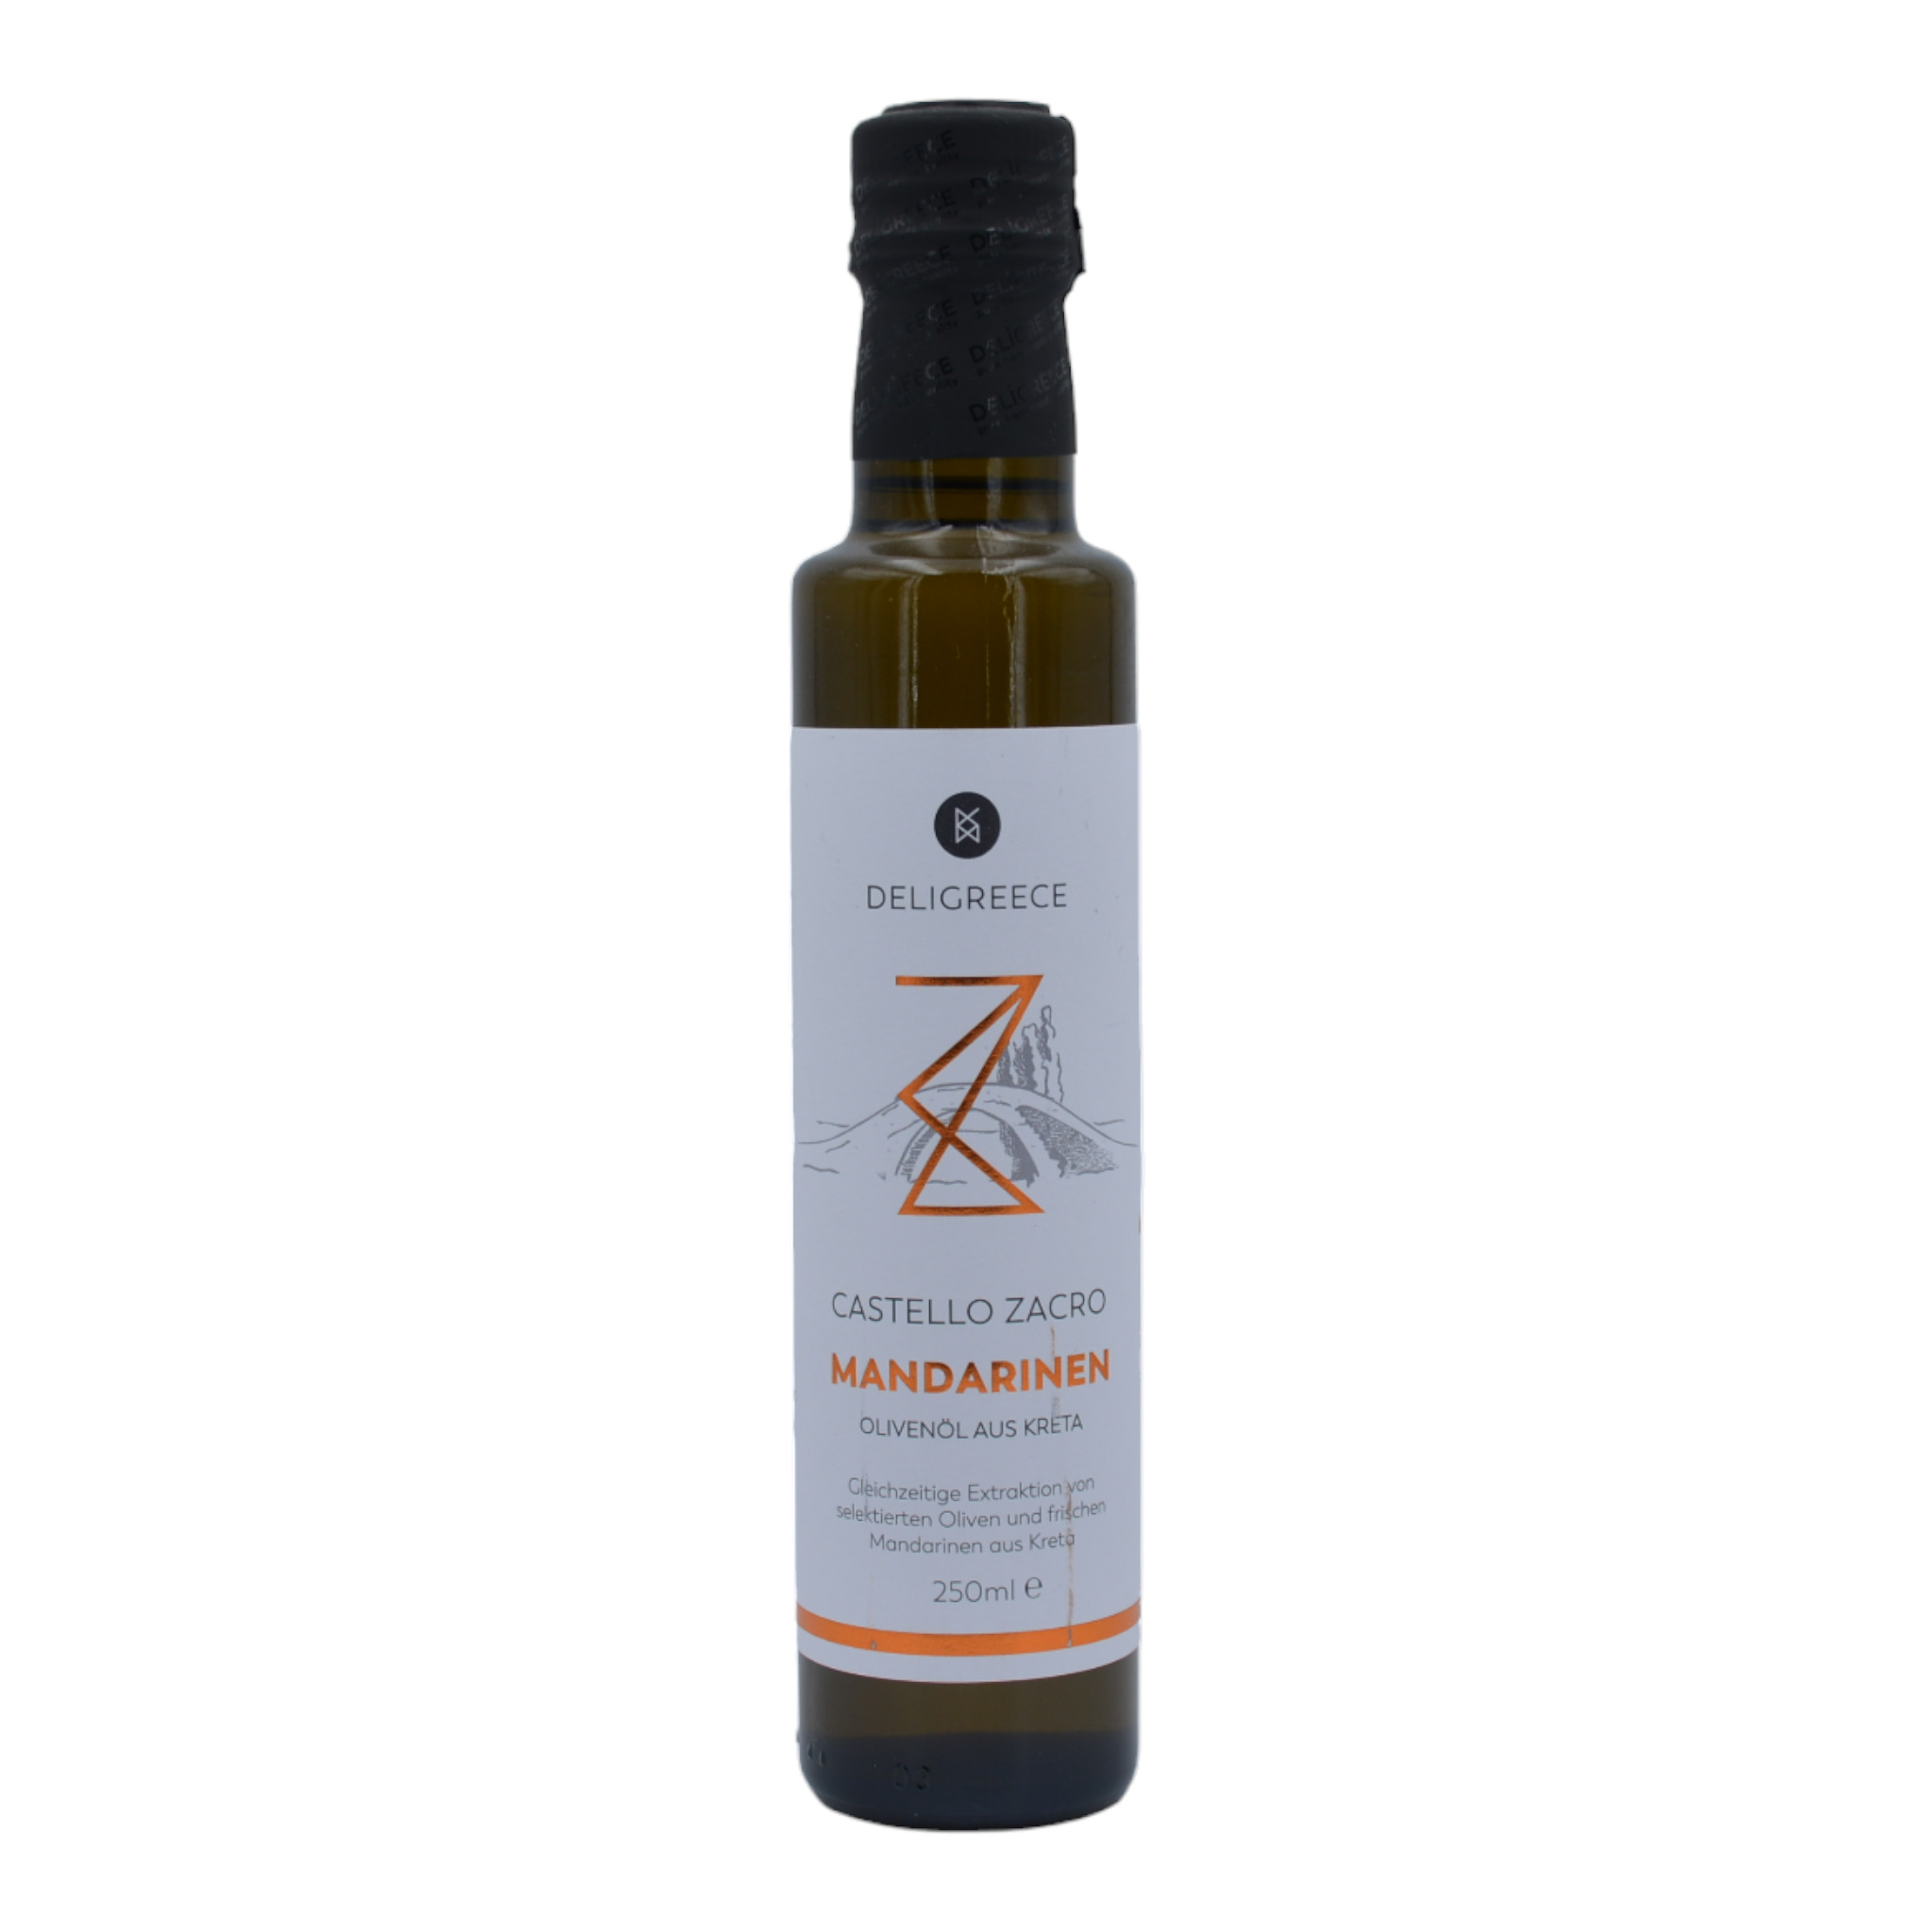 4260054323203Deligreece Castello Zacro Mandarinen Oliveöl aus Kreta f